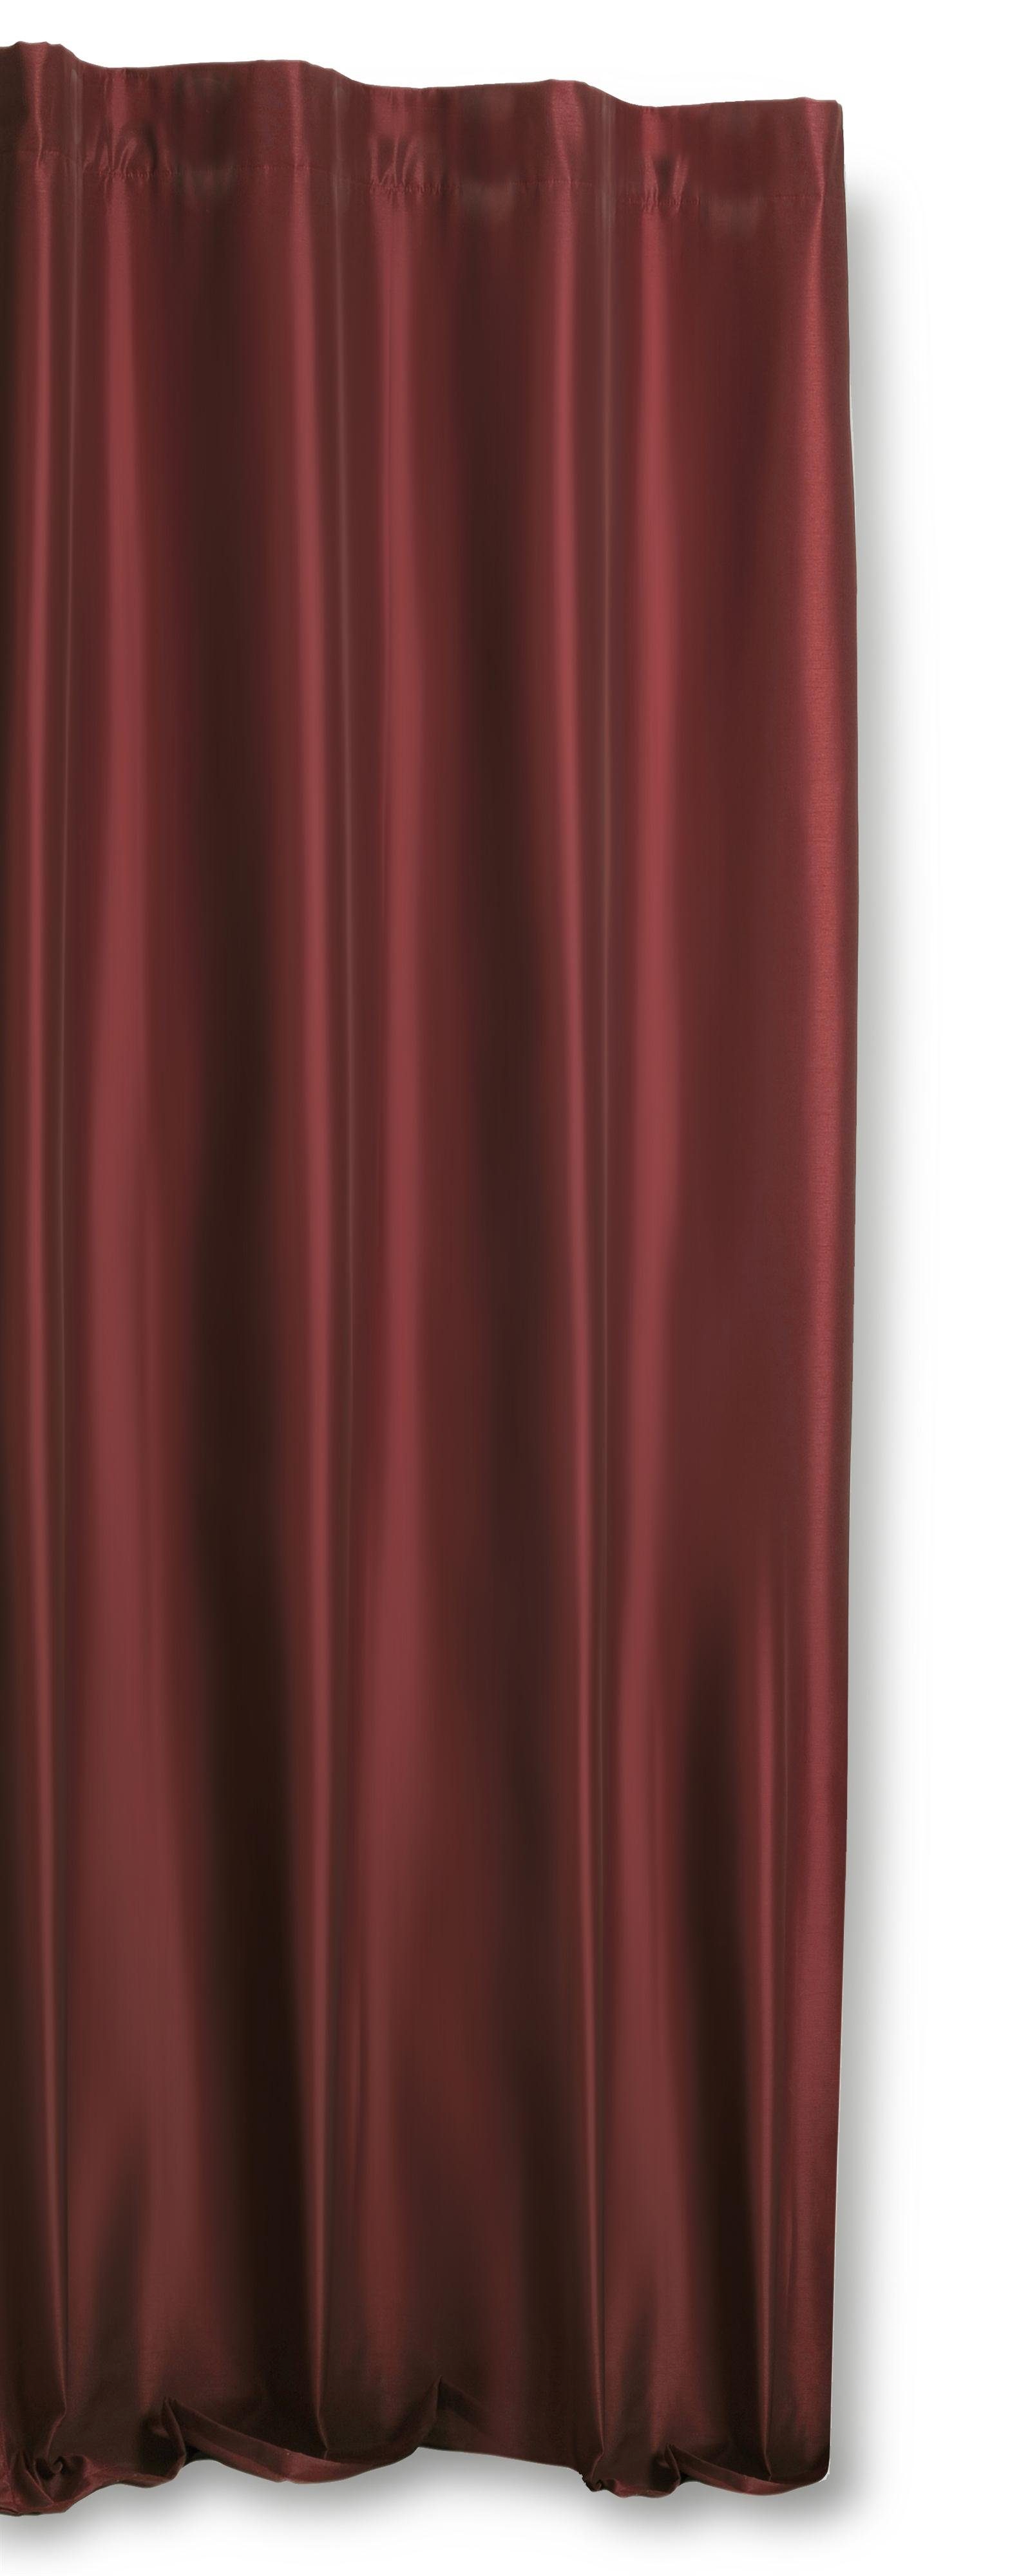 (1 Wildseiden Gardine Polyester halbtransparent, halbtransparent und Trend, Deko, Haus Vorhang Bordeaux St), Kräuselband 140x245cm Kräuselband Optik